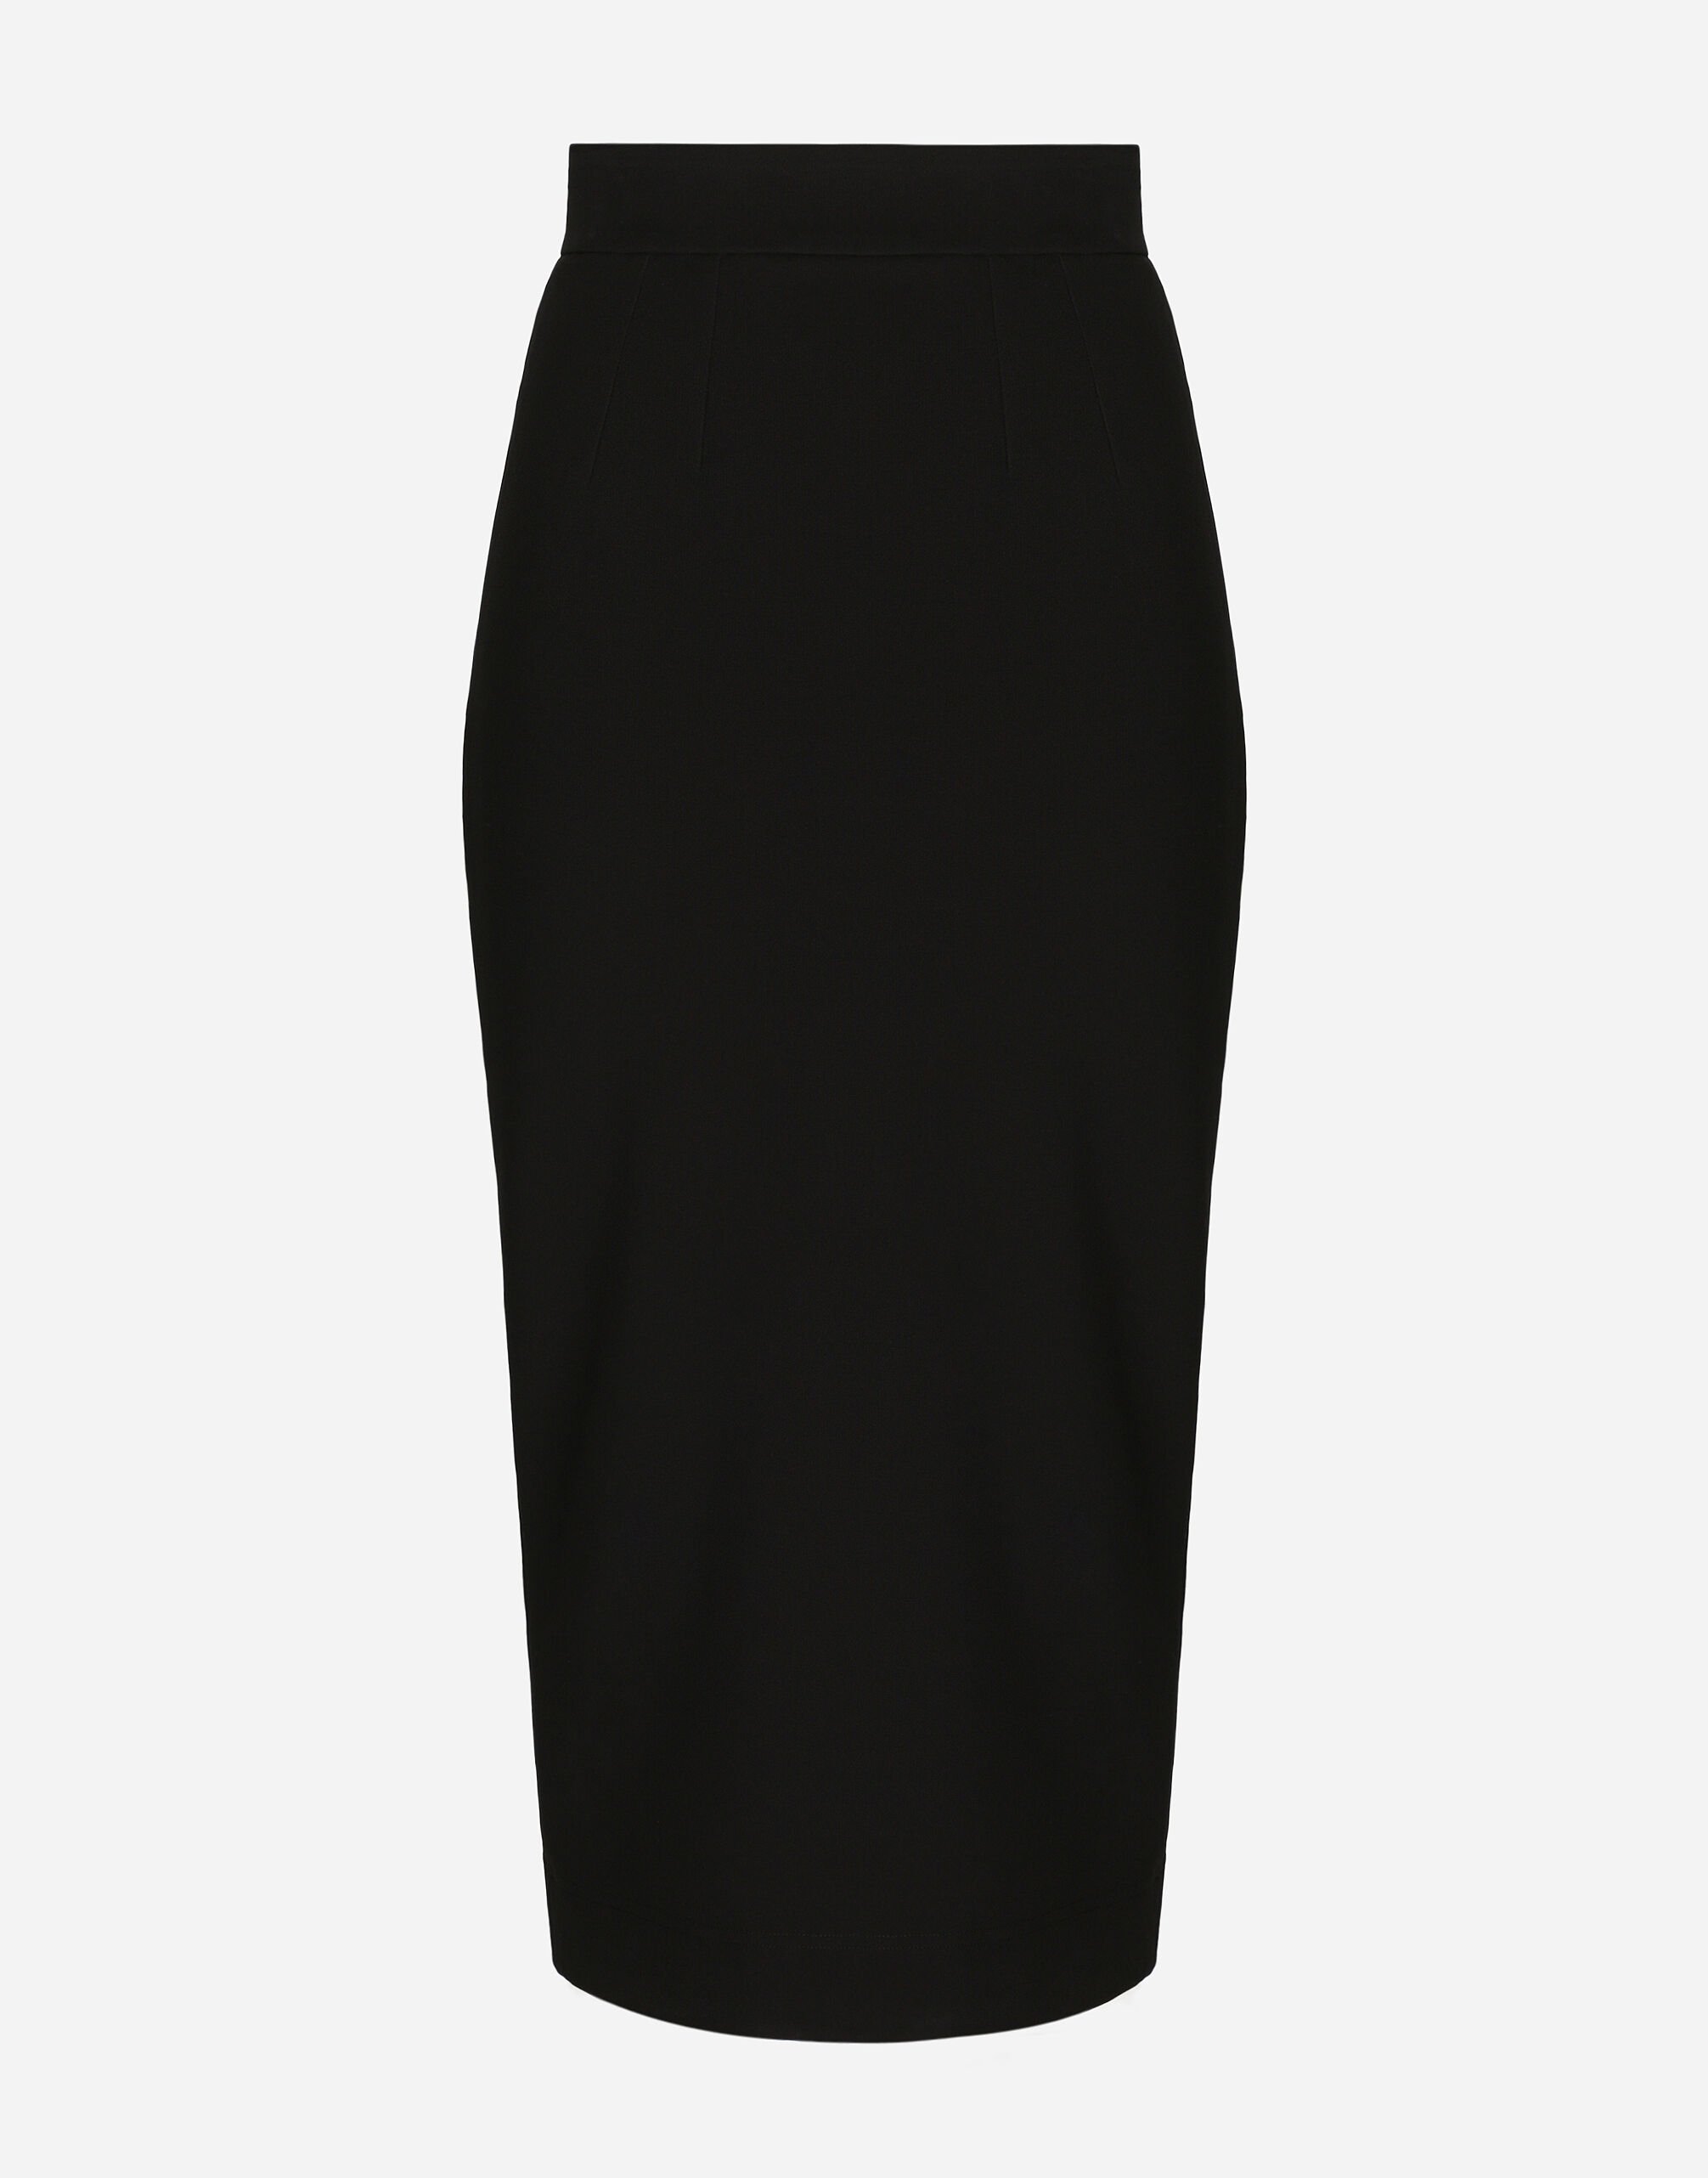 Dolce & Gabbana تنورة من جيرسي تقني بطول للربلة أسود BB6002AI413